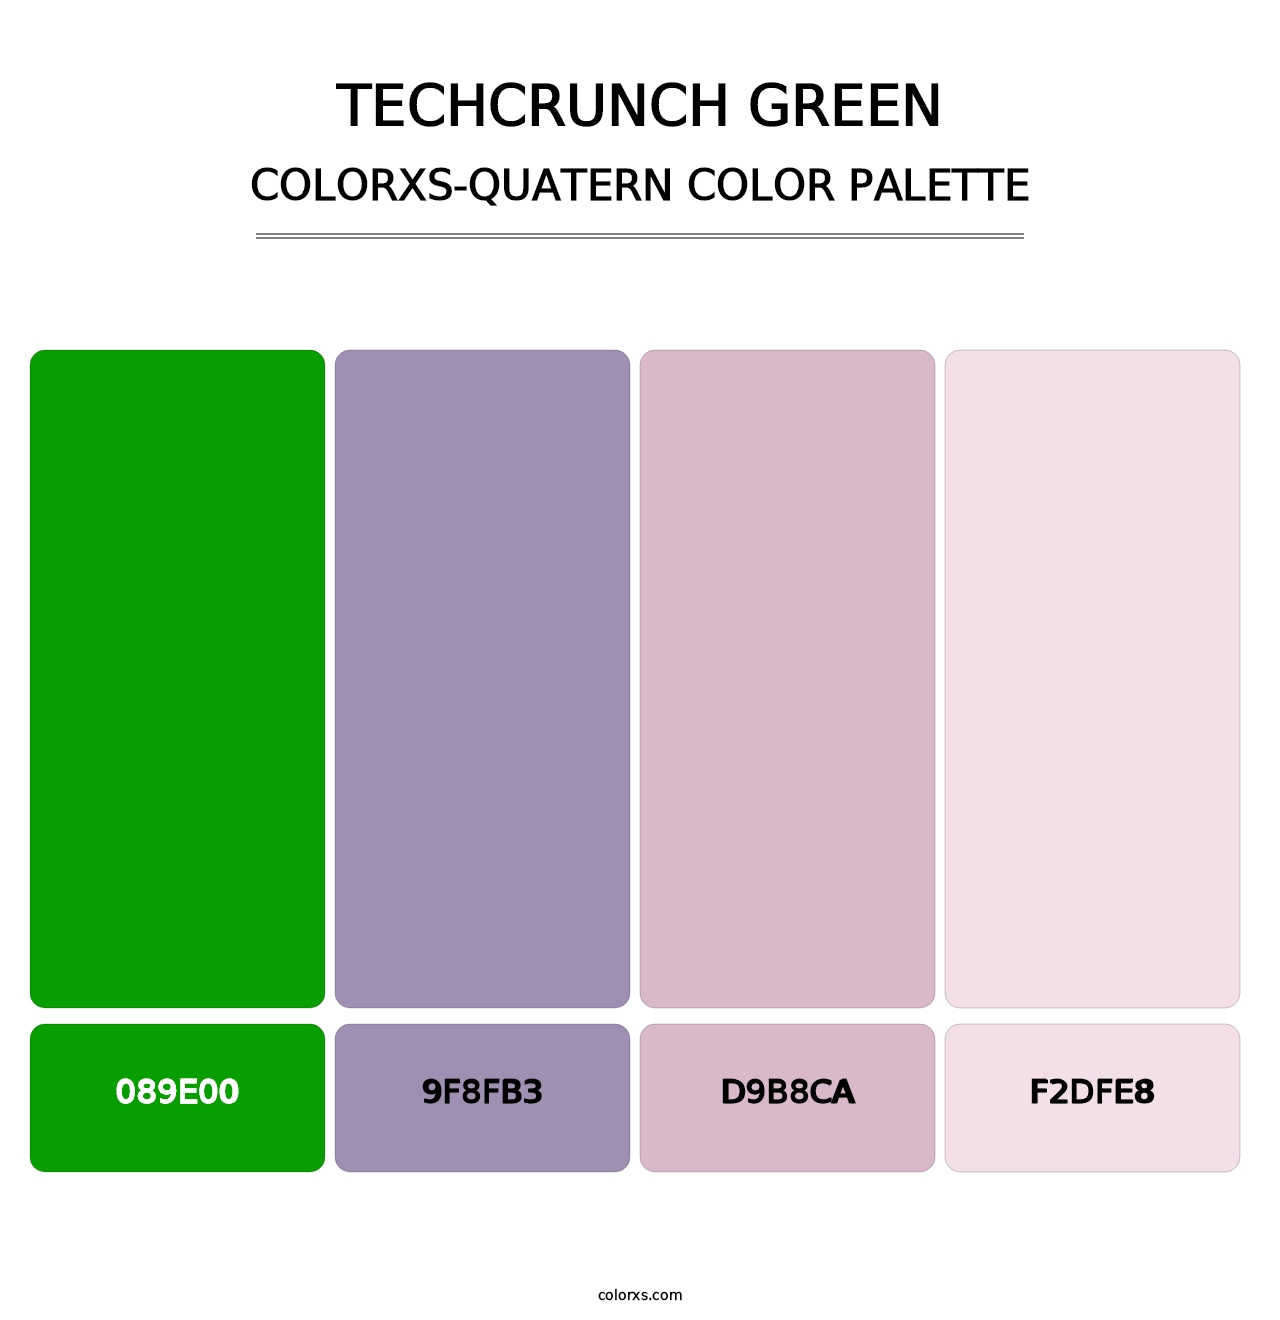 TechCrunch Green - Colorxs Quatern Palette